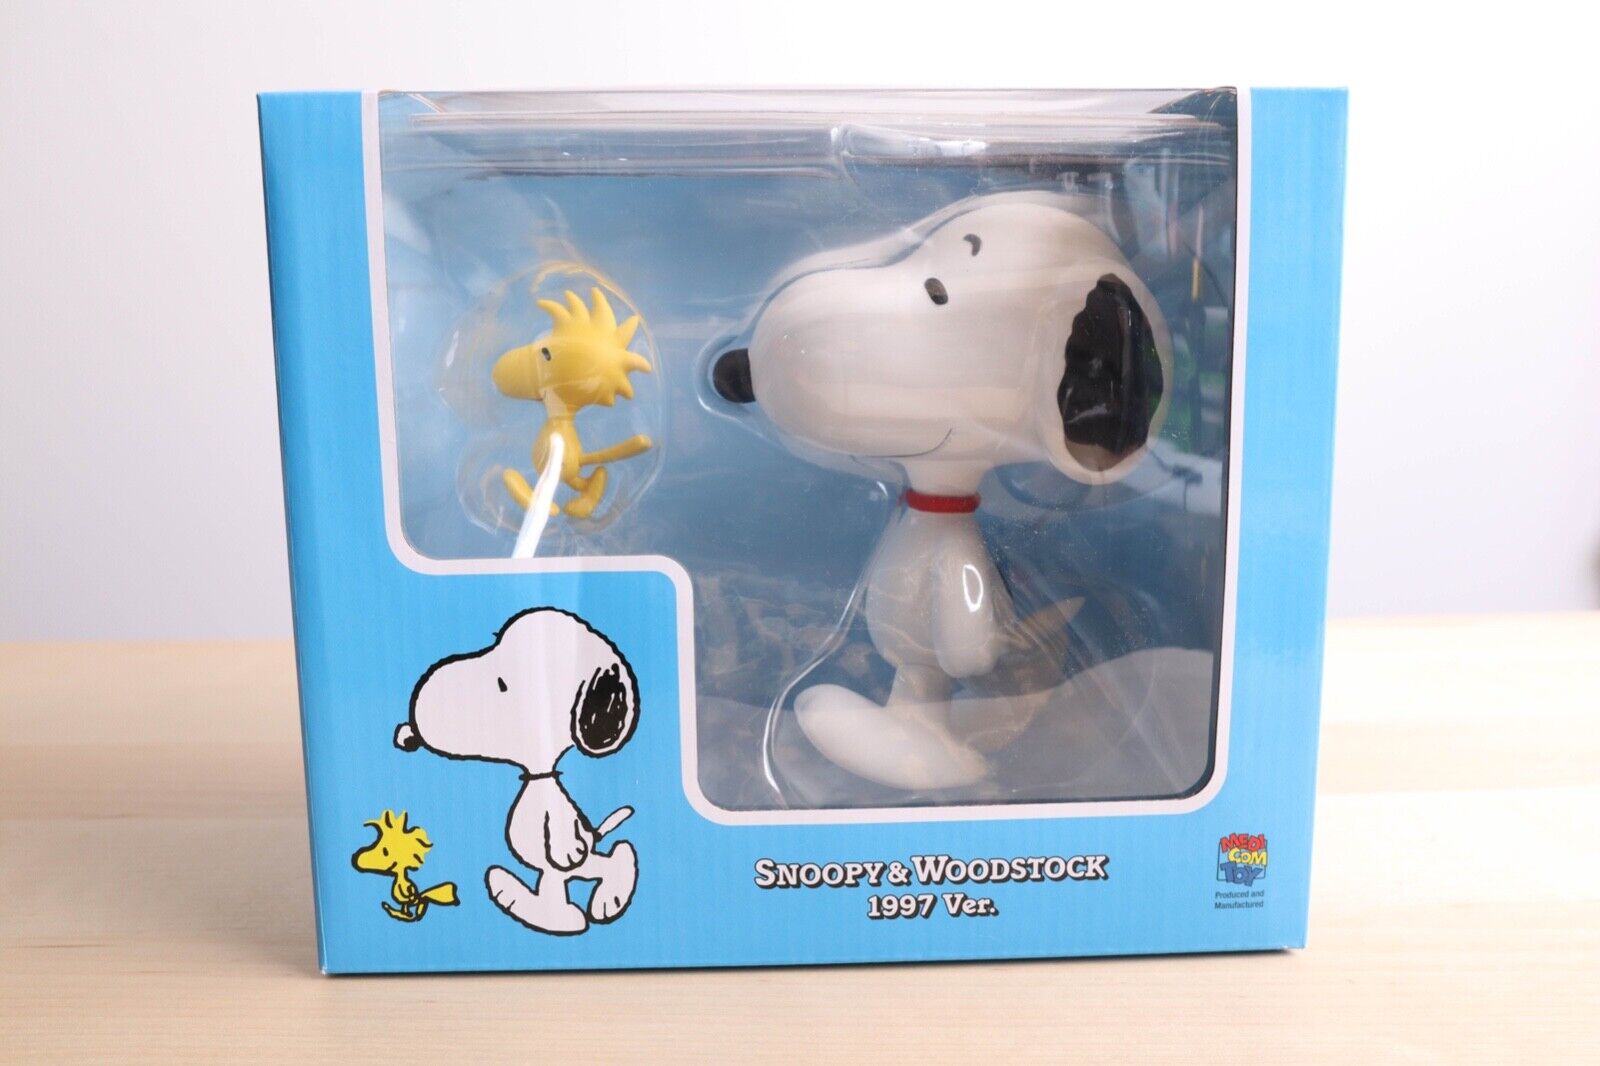 Peanuts VCD Snoopy & Woodstock 1997 Ver. White Figures Medicom